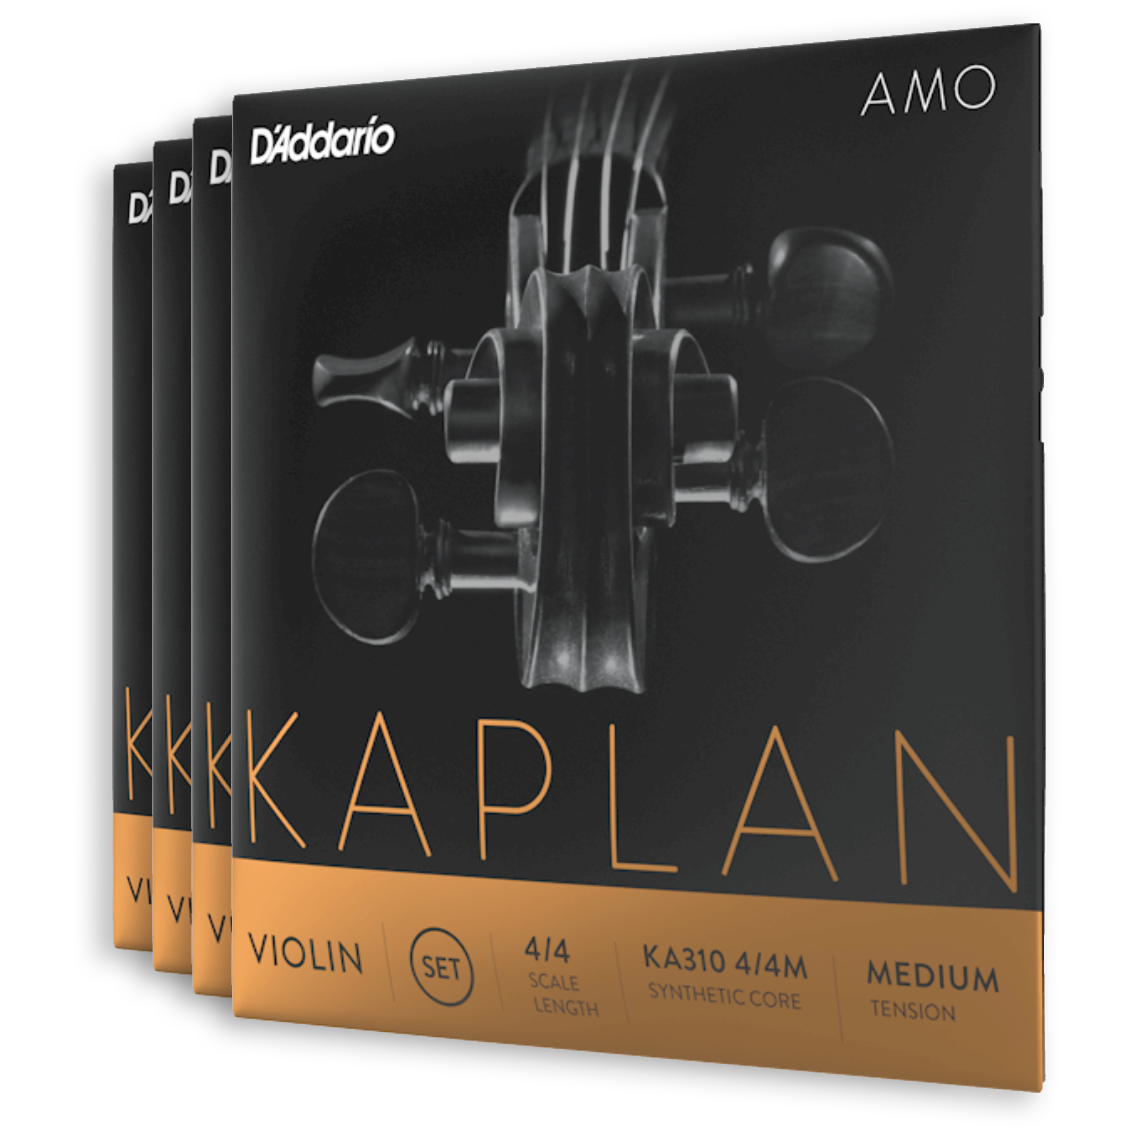 Kaplan Amo Violin Set